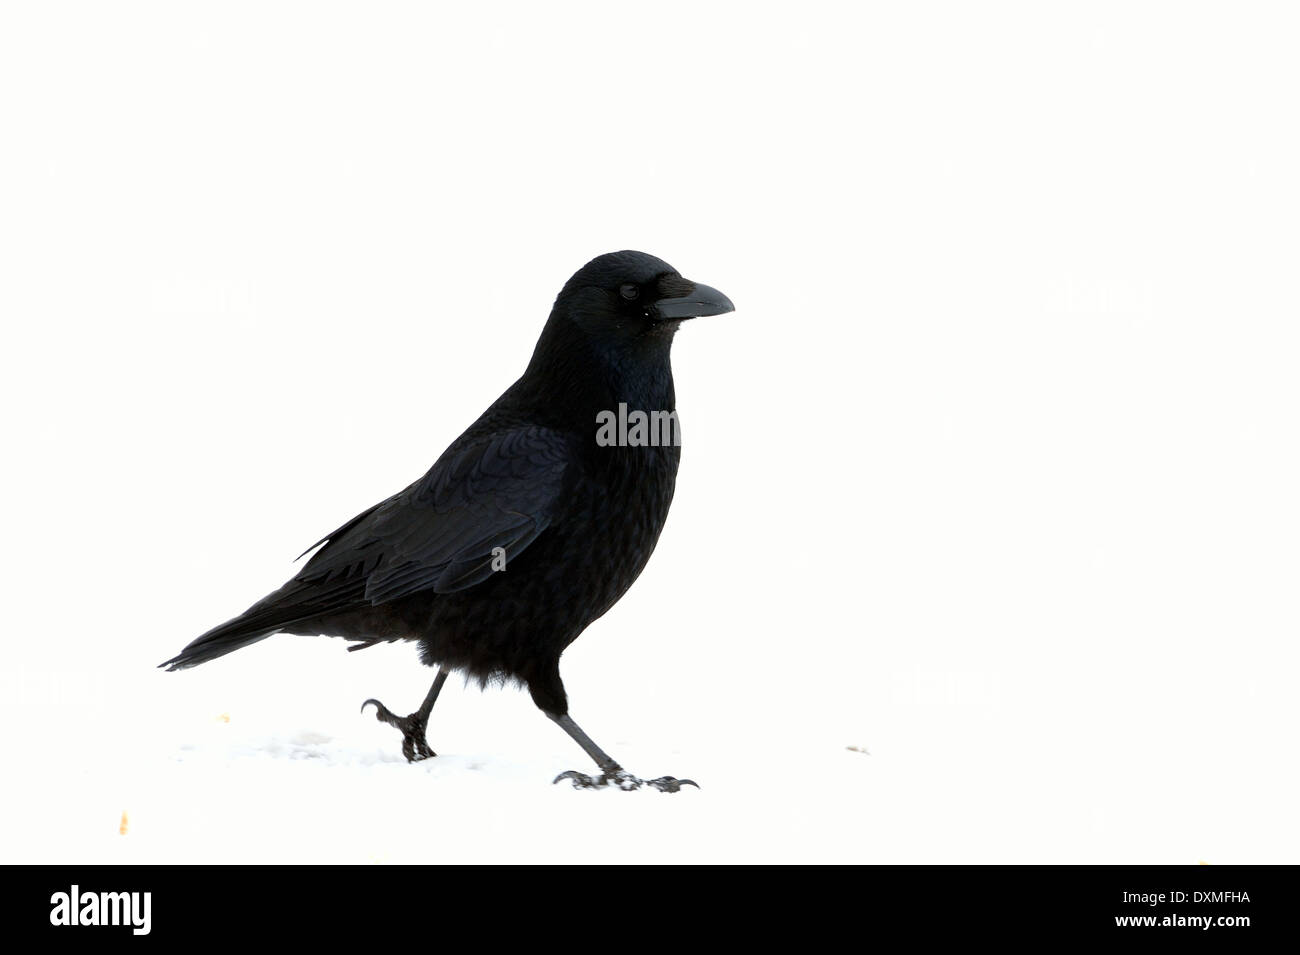 Carrion crow - Eurasian Crow (Corvus corone) passeggiate sulla neve in inverno Foto Stock